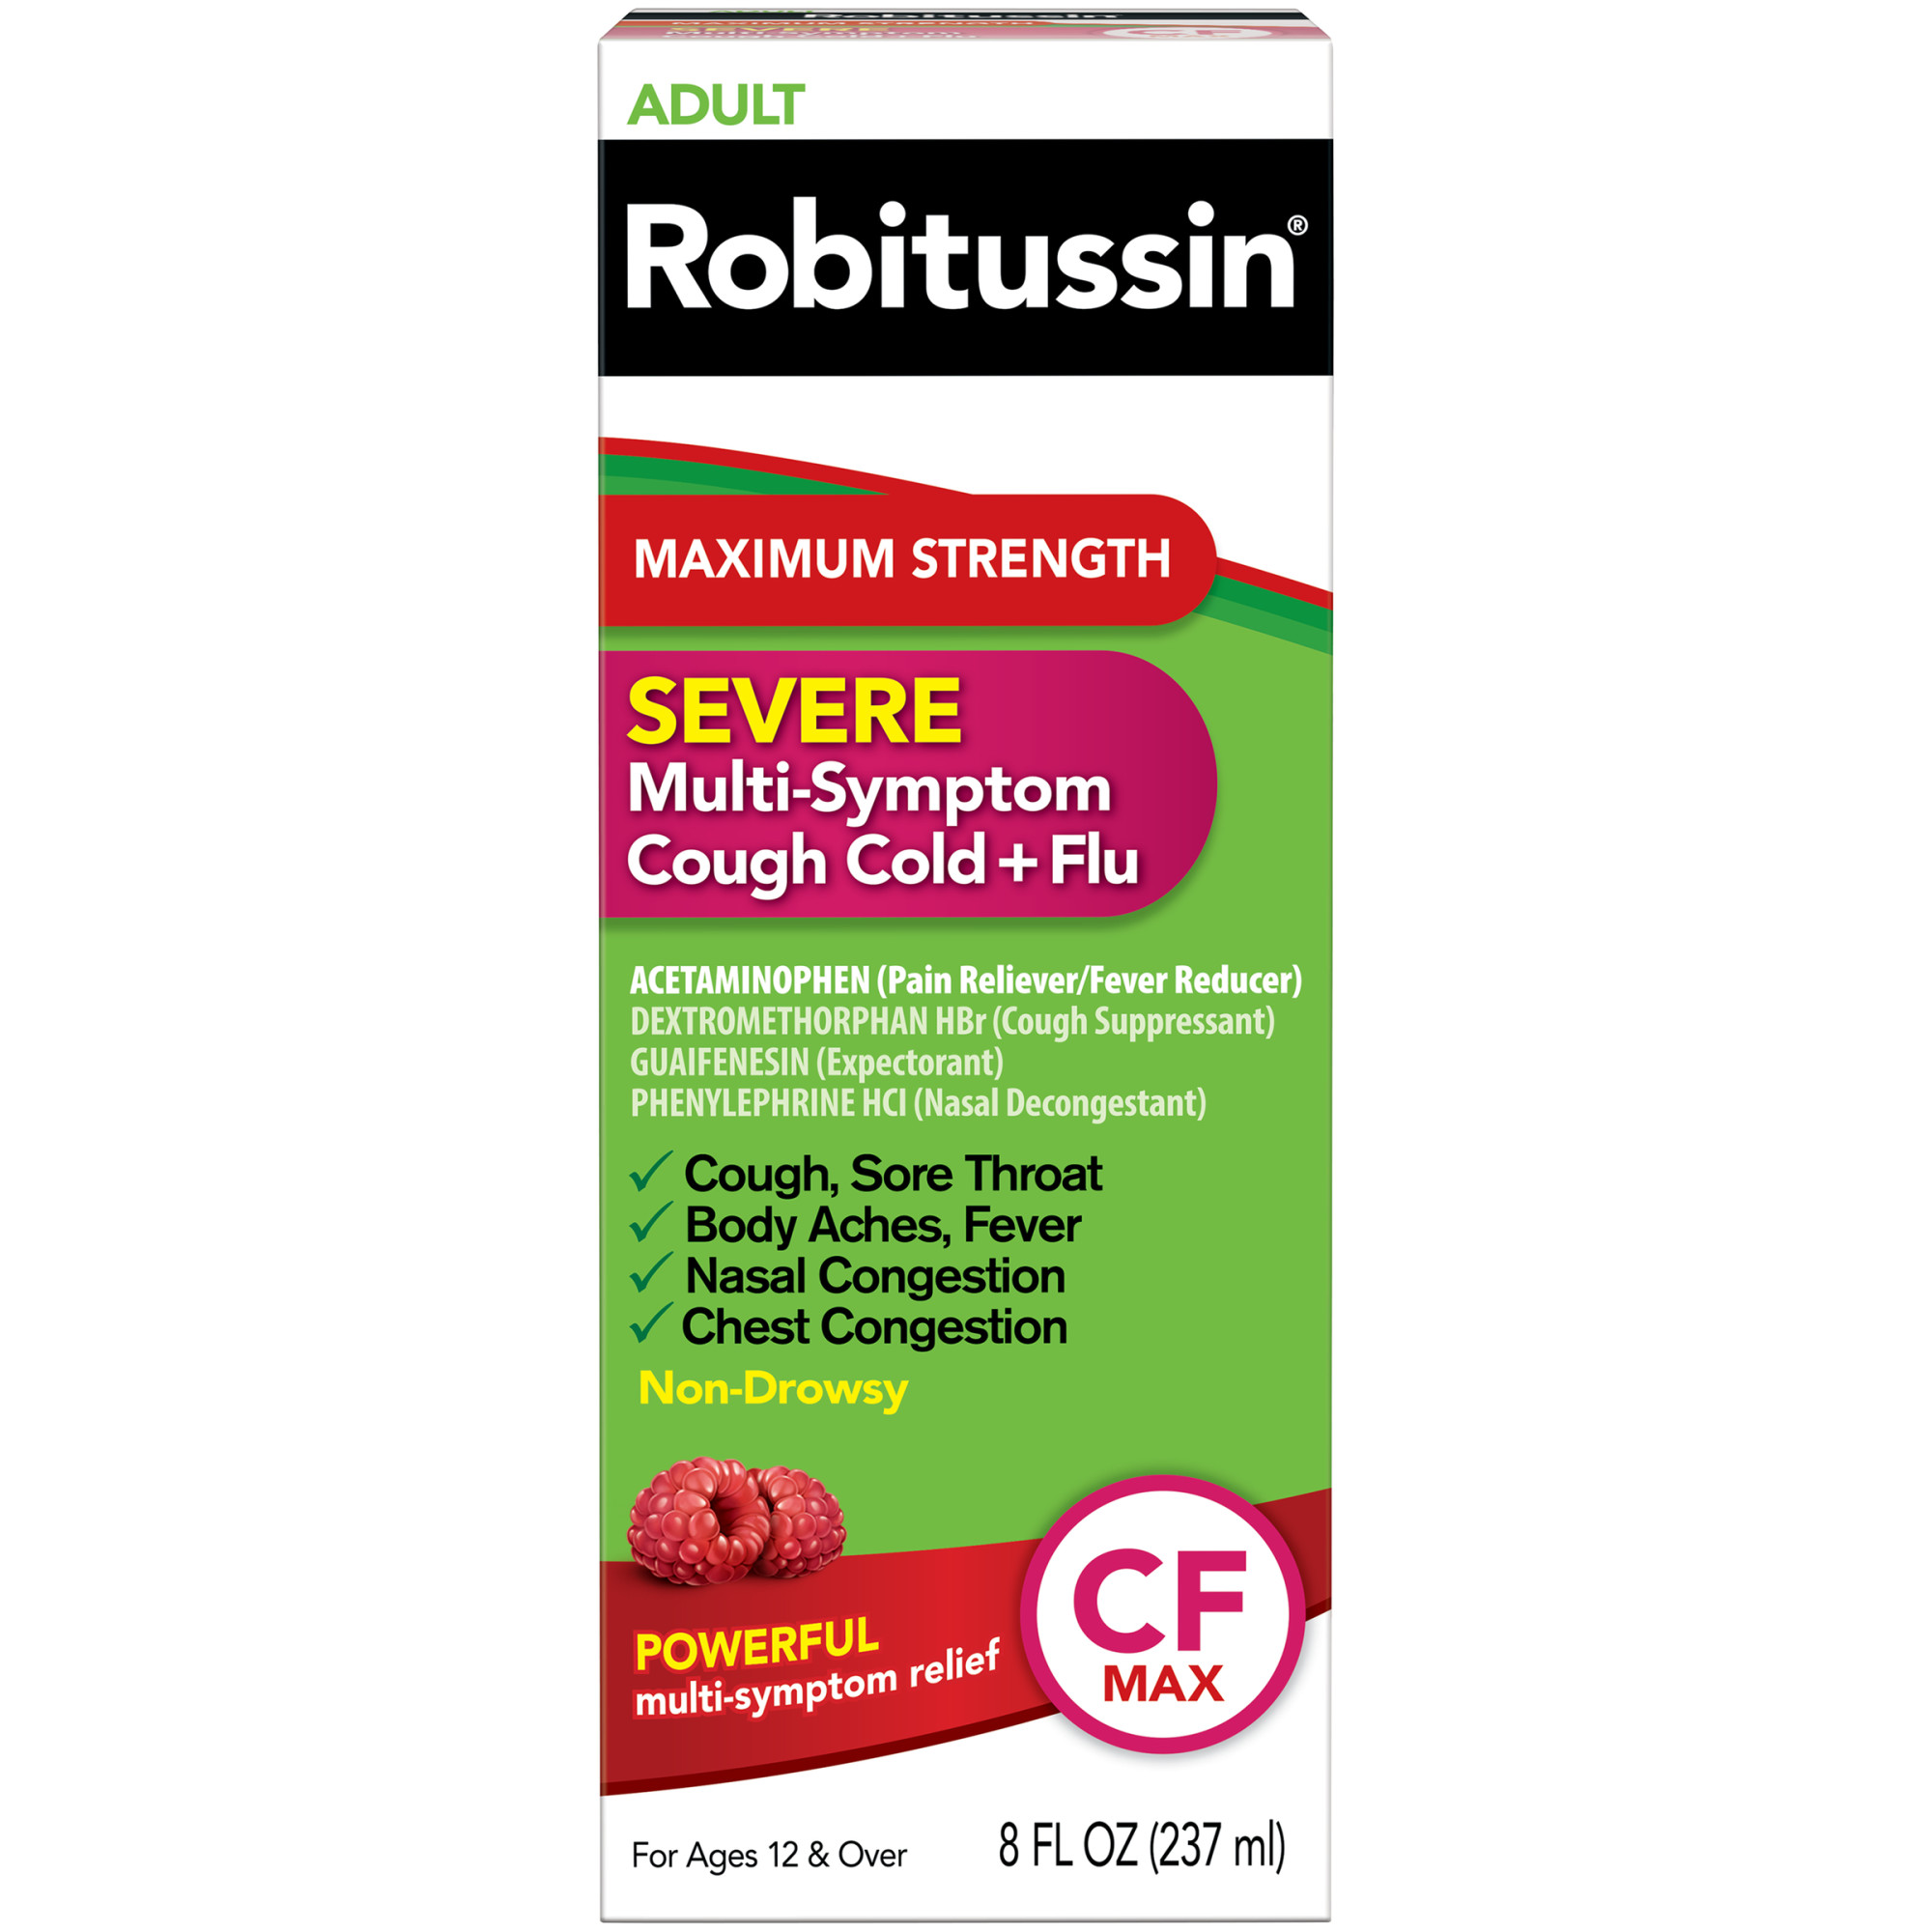 Robitussin Adult Max Strength Severe Cough Cold & Flu Liquid Medicine $2.54 + Free Store Pickup at Walmart or FS w/ Walmart+